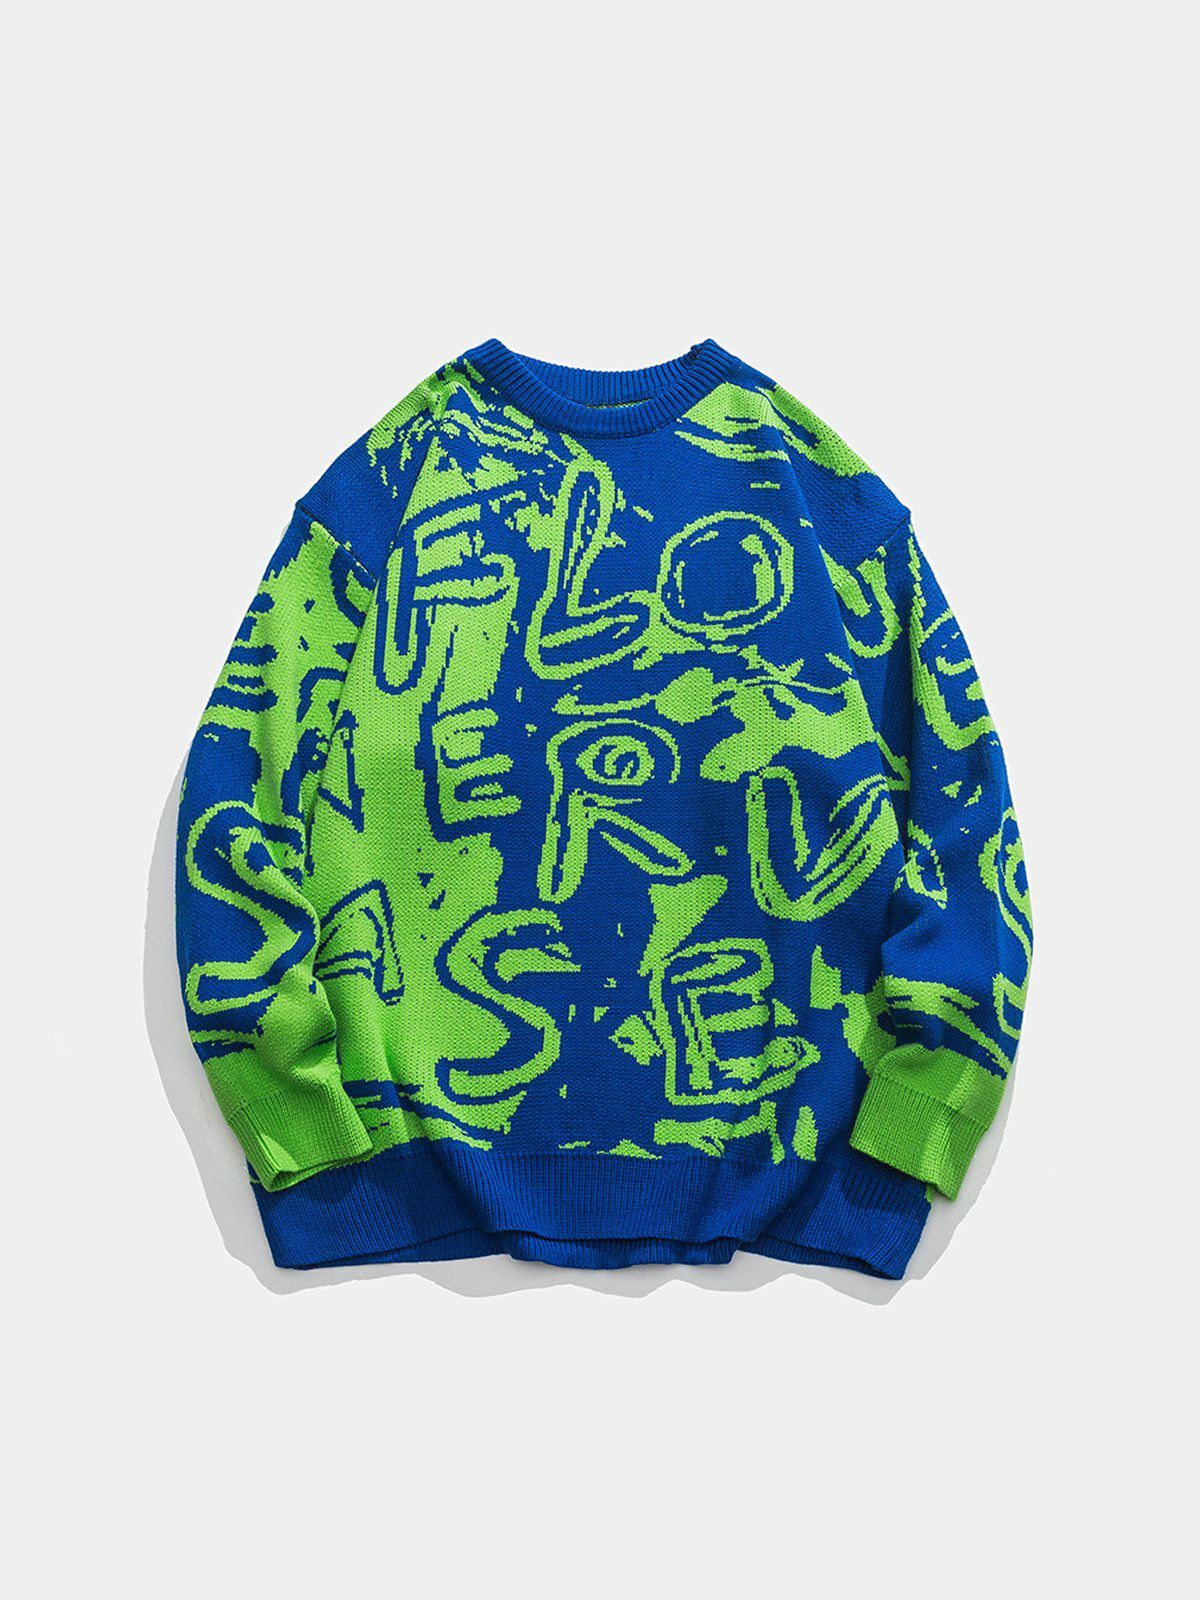 bold graffiti print sweater urban fashion statement 8576